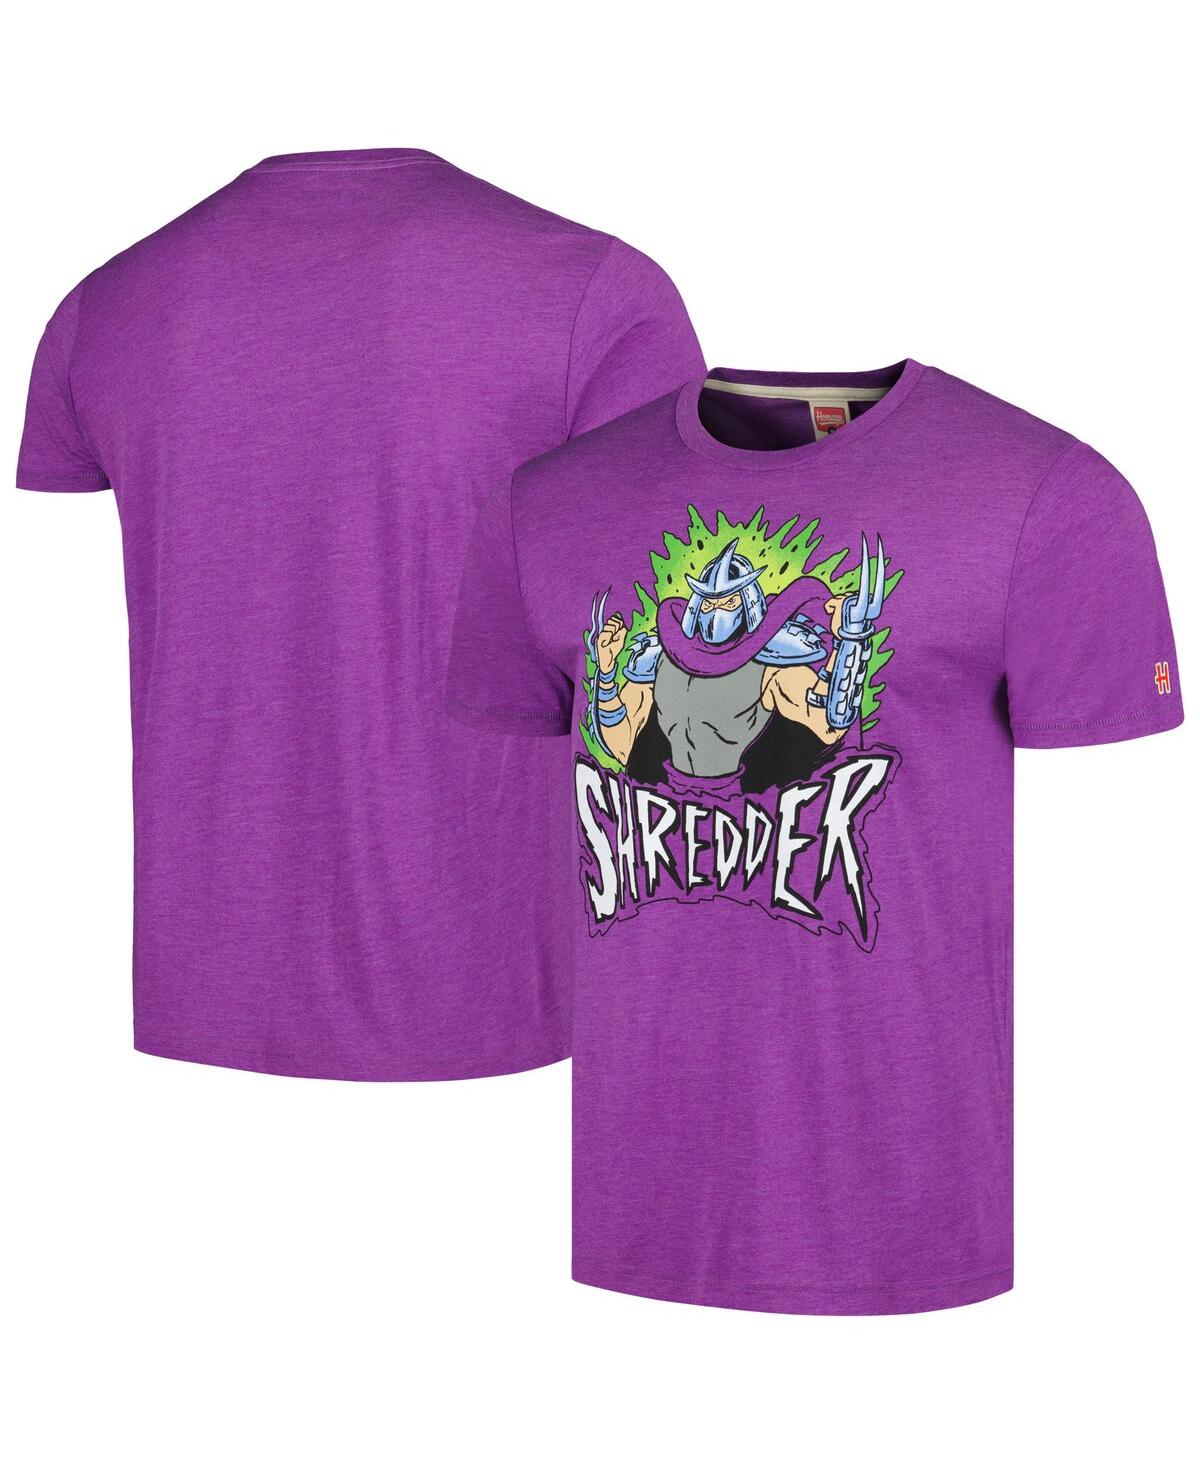 Men's and Women's Homage Purple Teenage Mutant Ninja Turtles Shredder Graphic Tri-Blend T-shirt - Purple